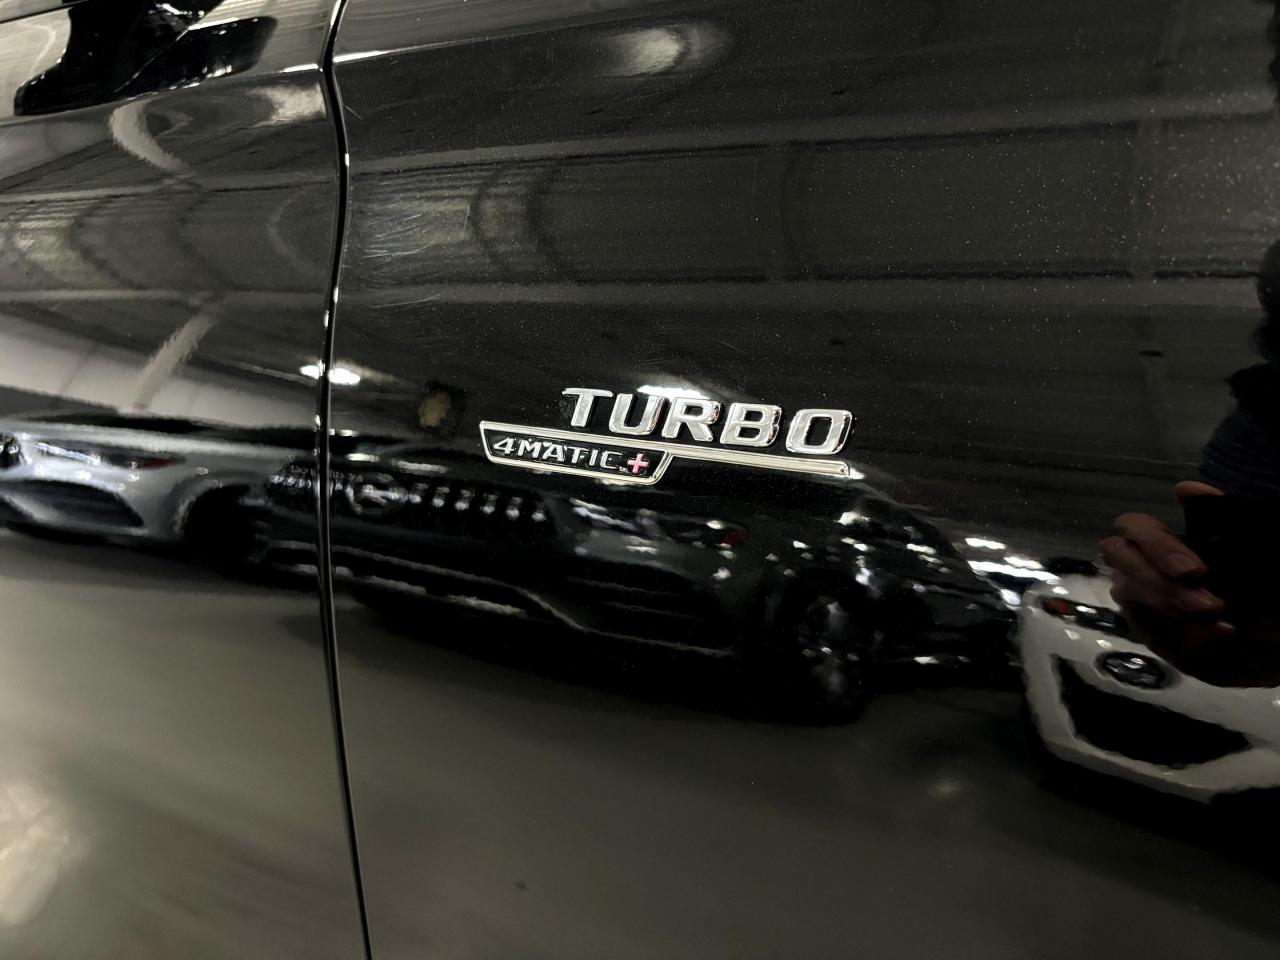 2020 Mercedes-Benz E-Class E53 AMG|TURBO|4MATIC+|NAV|CARBON|360CAM|BURMESTER| - Photo #5